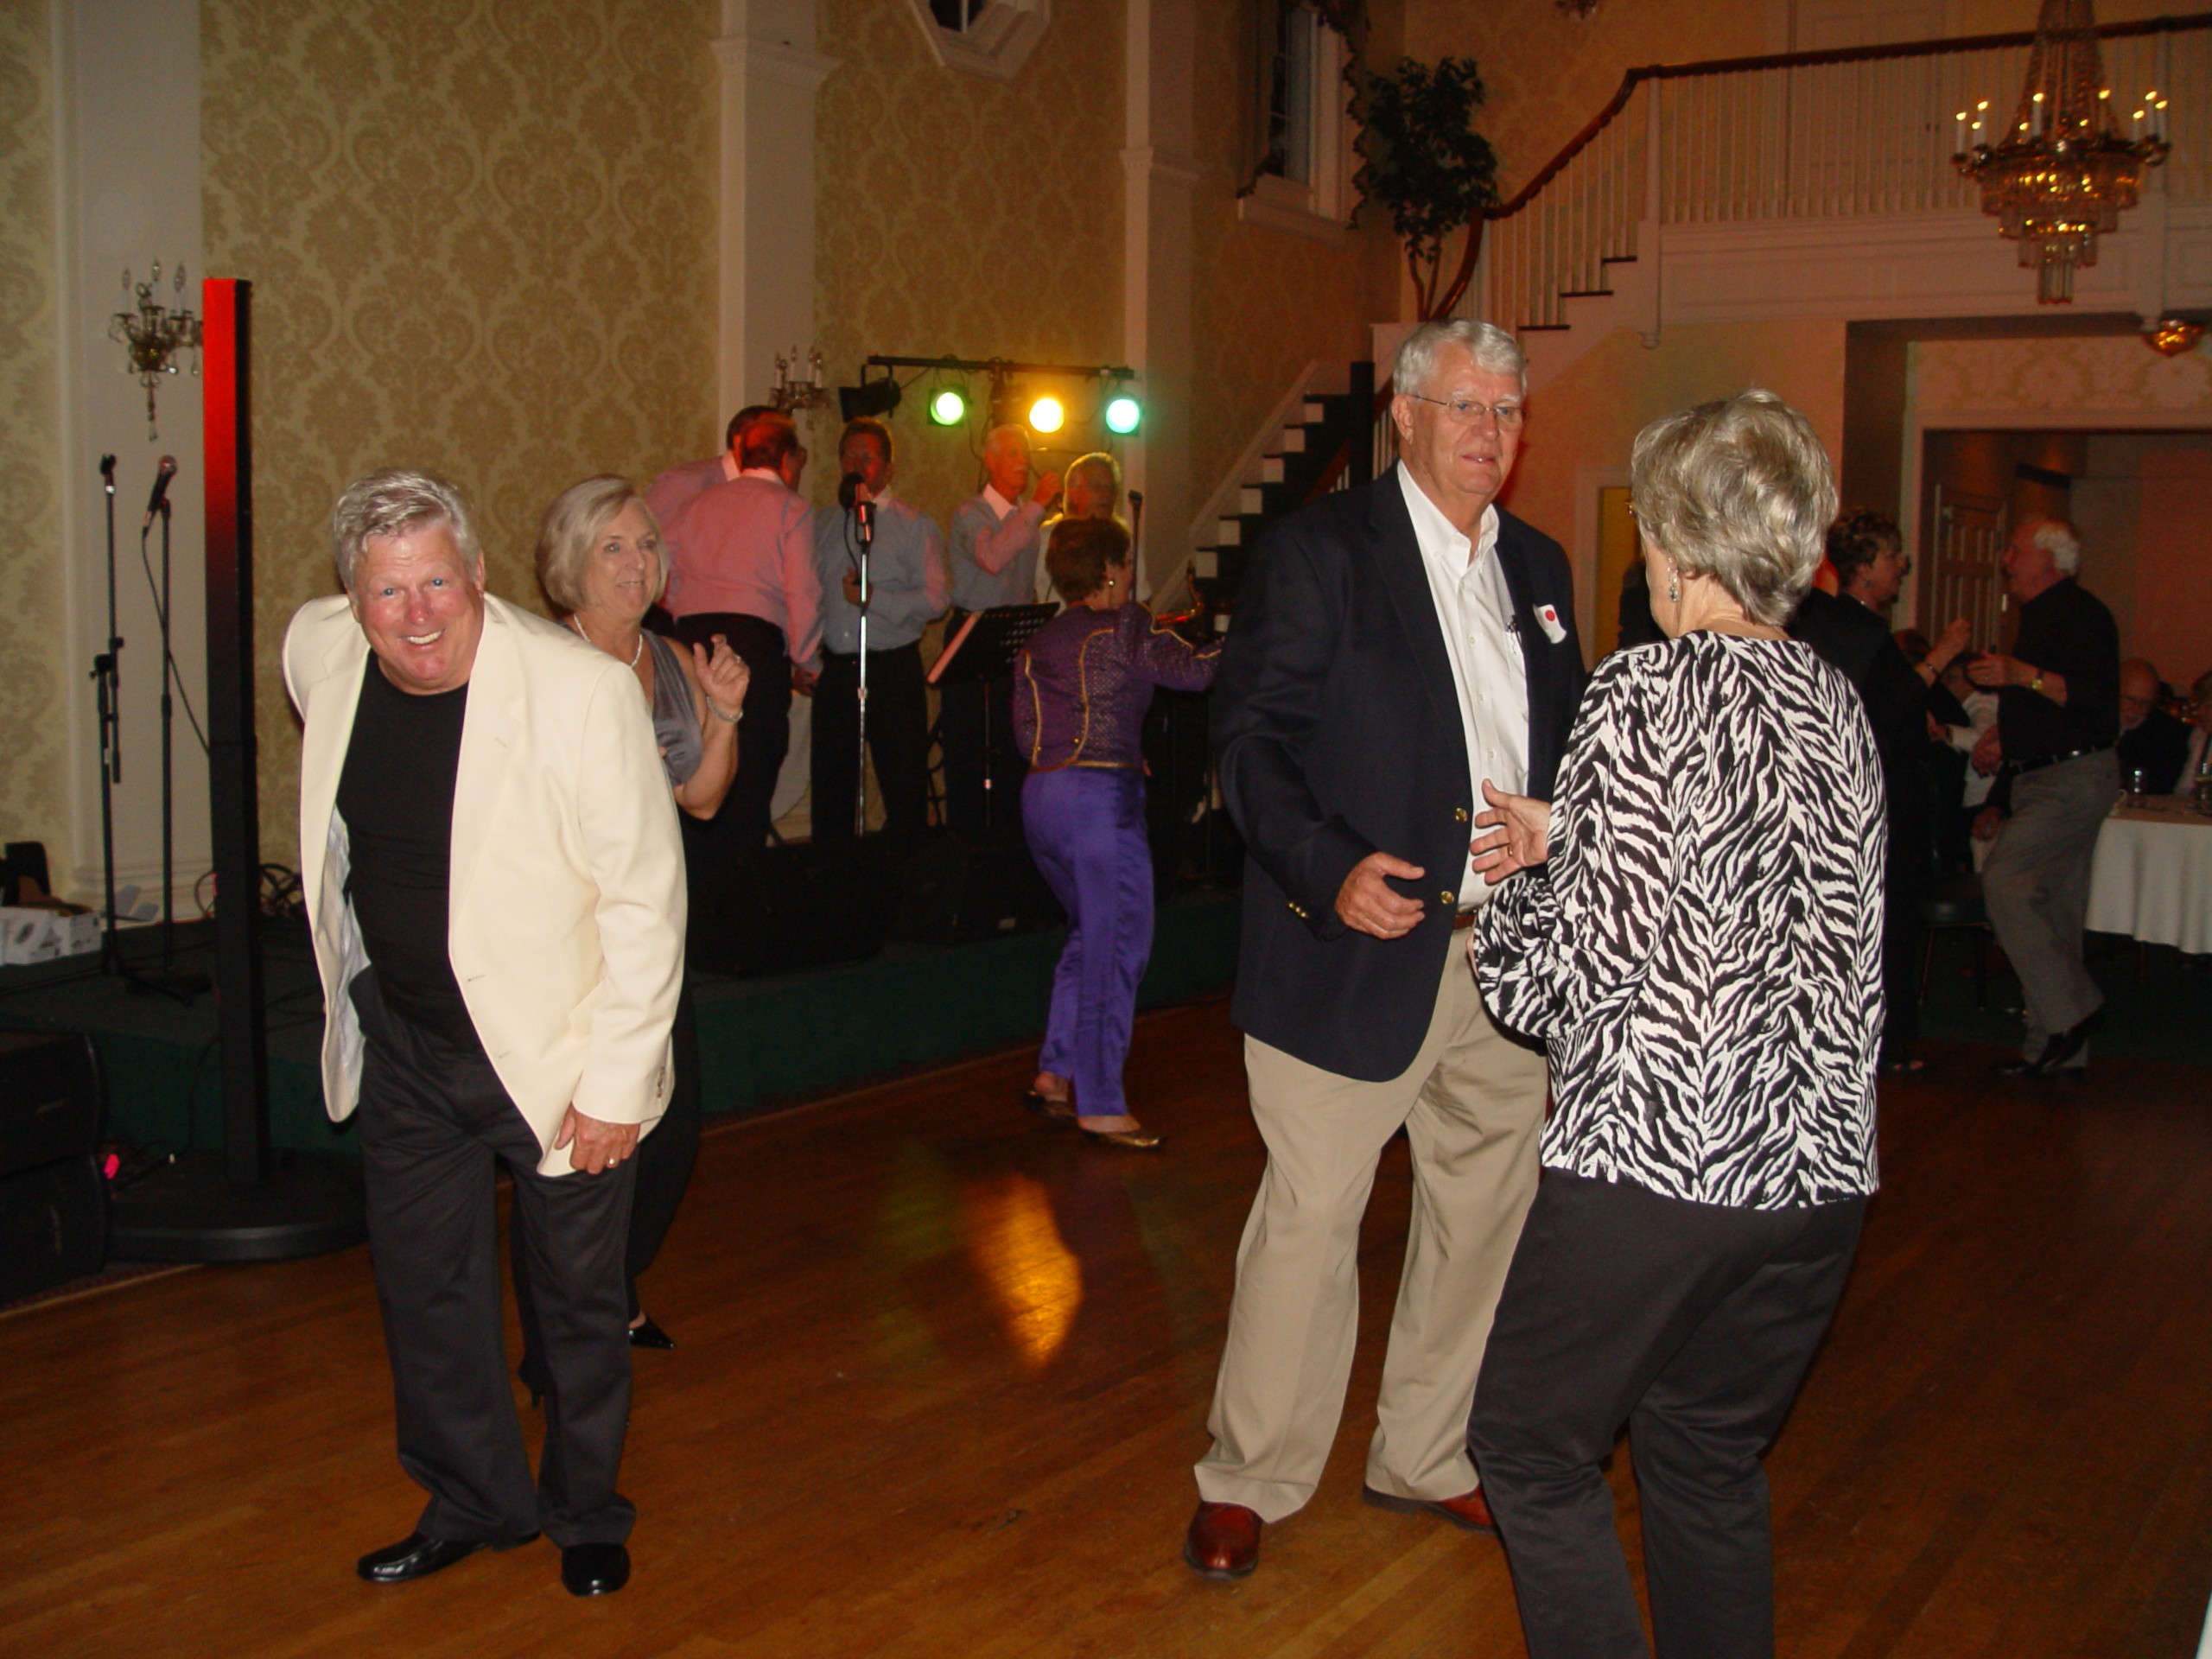 Dancing The Night Away~
Joey,Pam,David,Linda